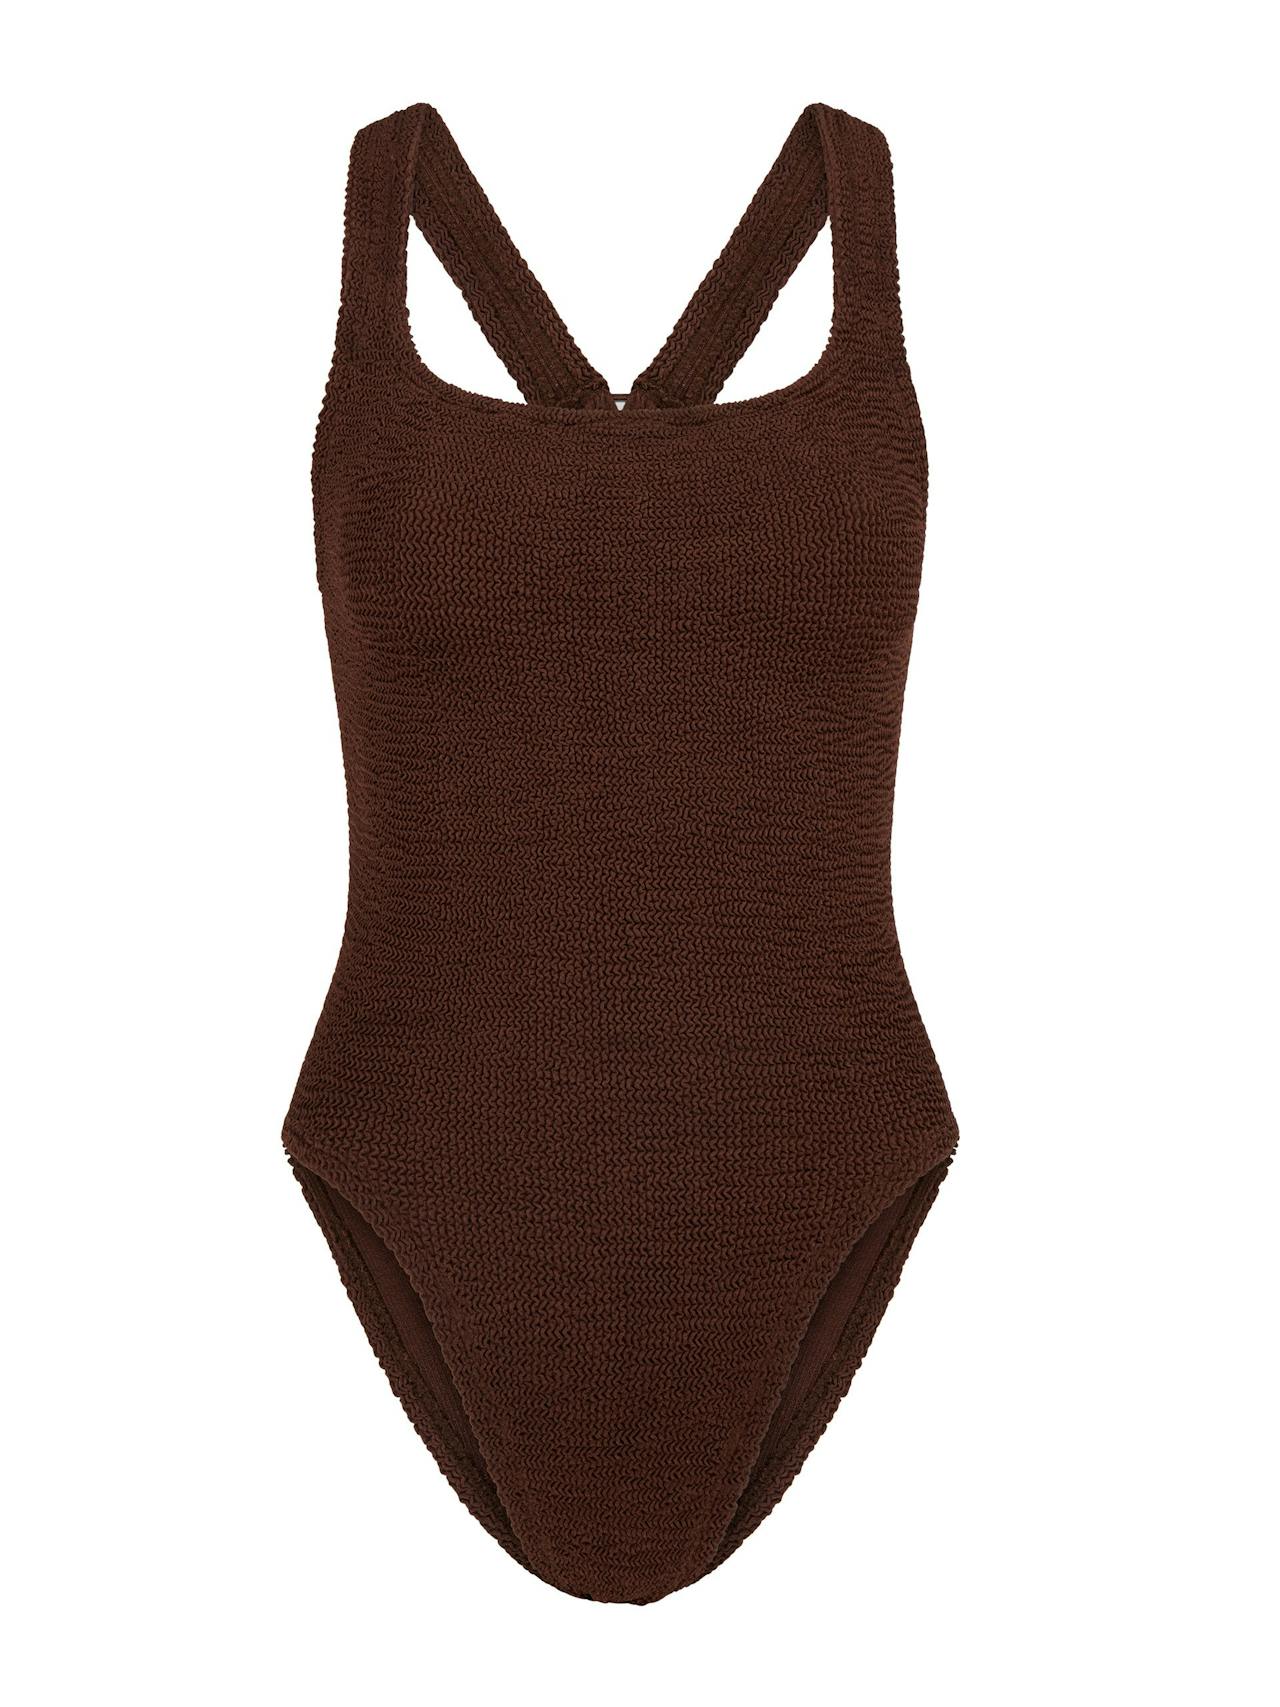 Metallic chocolate-brown Maya swimsuit